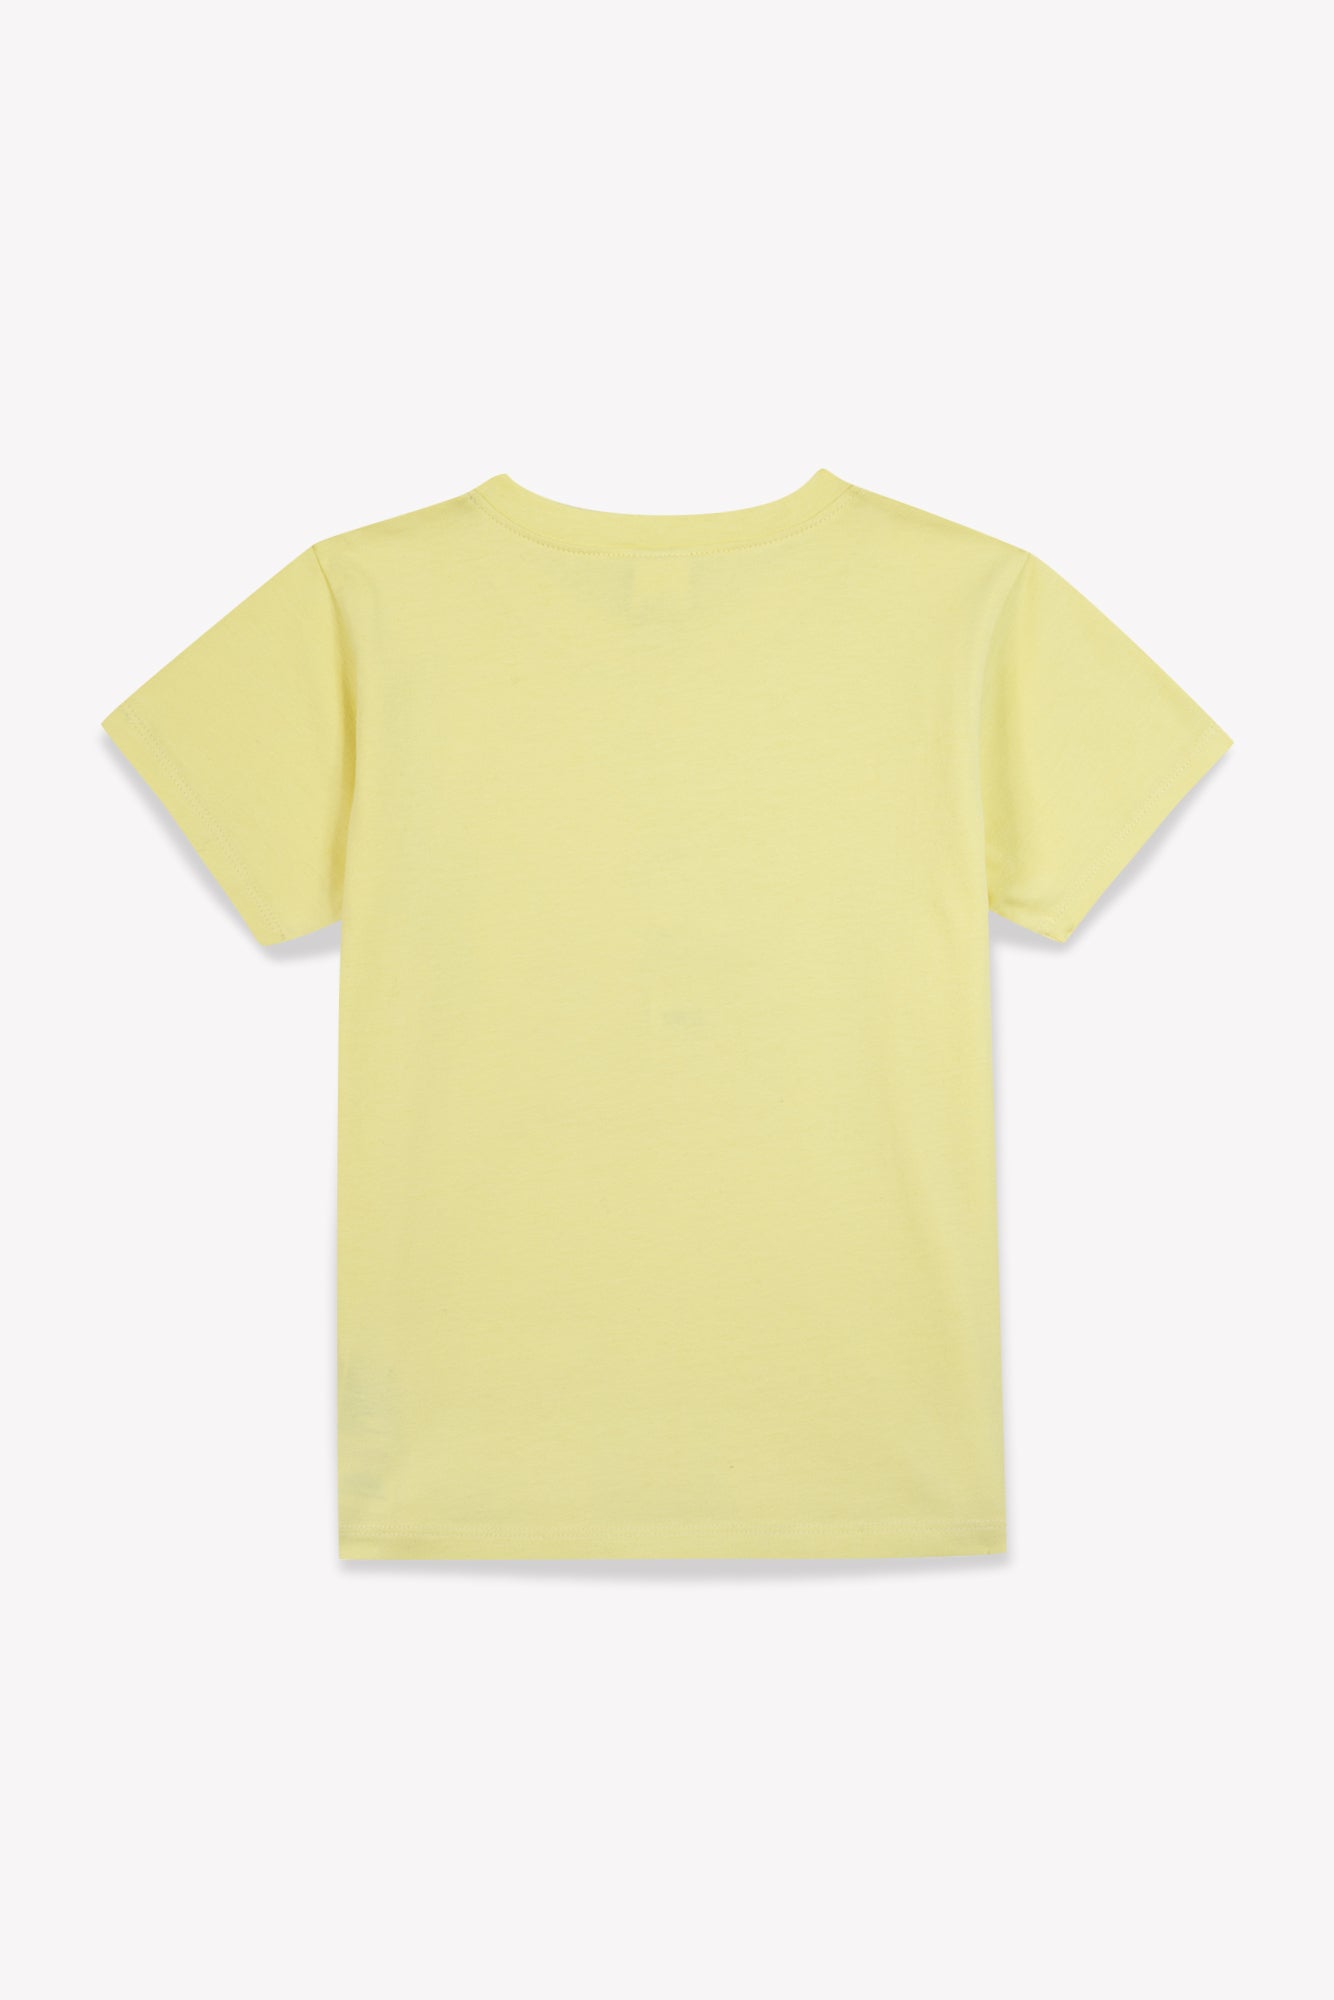 Tee-shirt - Tubo jaune coton organique